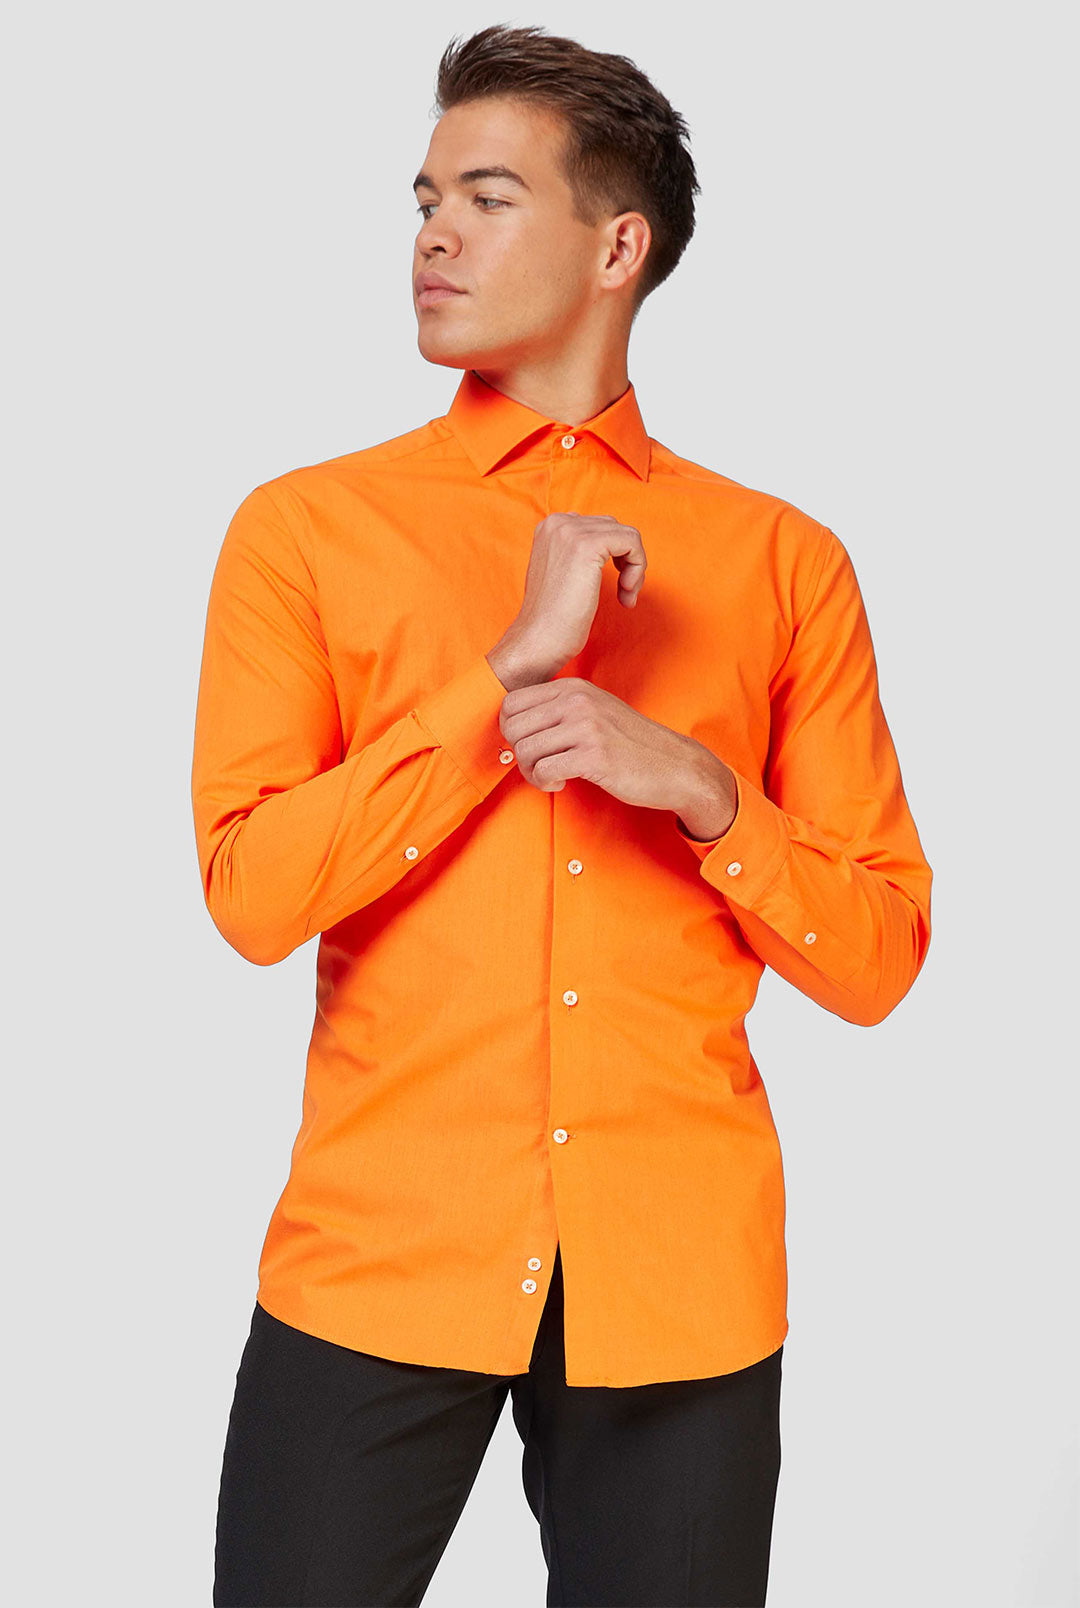 Orangefarbenes Business Hemd | OppoSuits | Herrenhemd